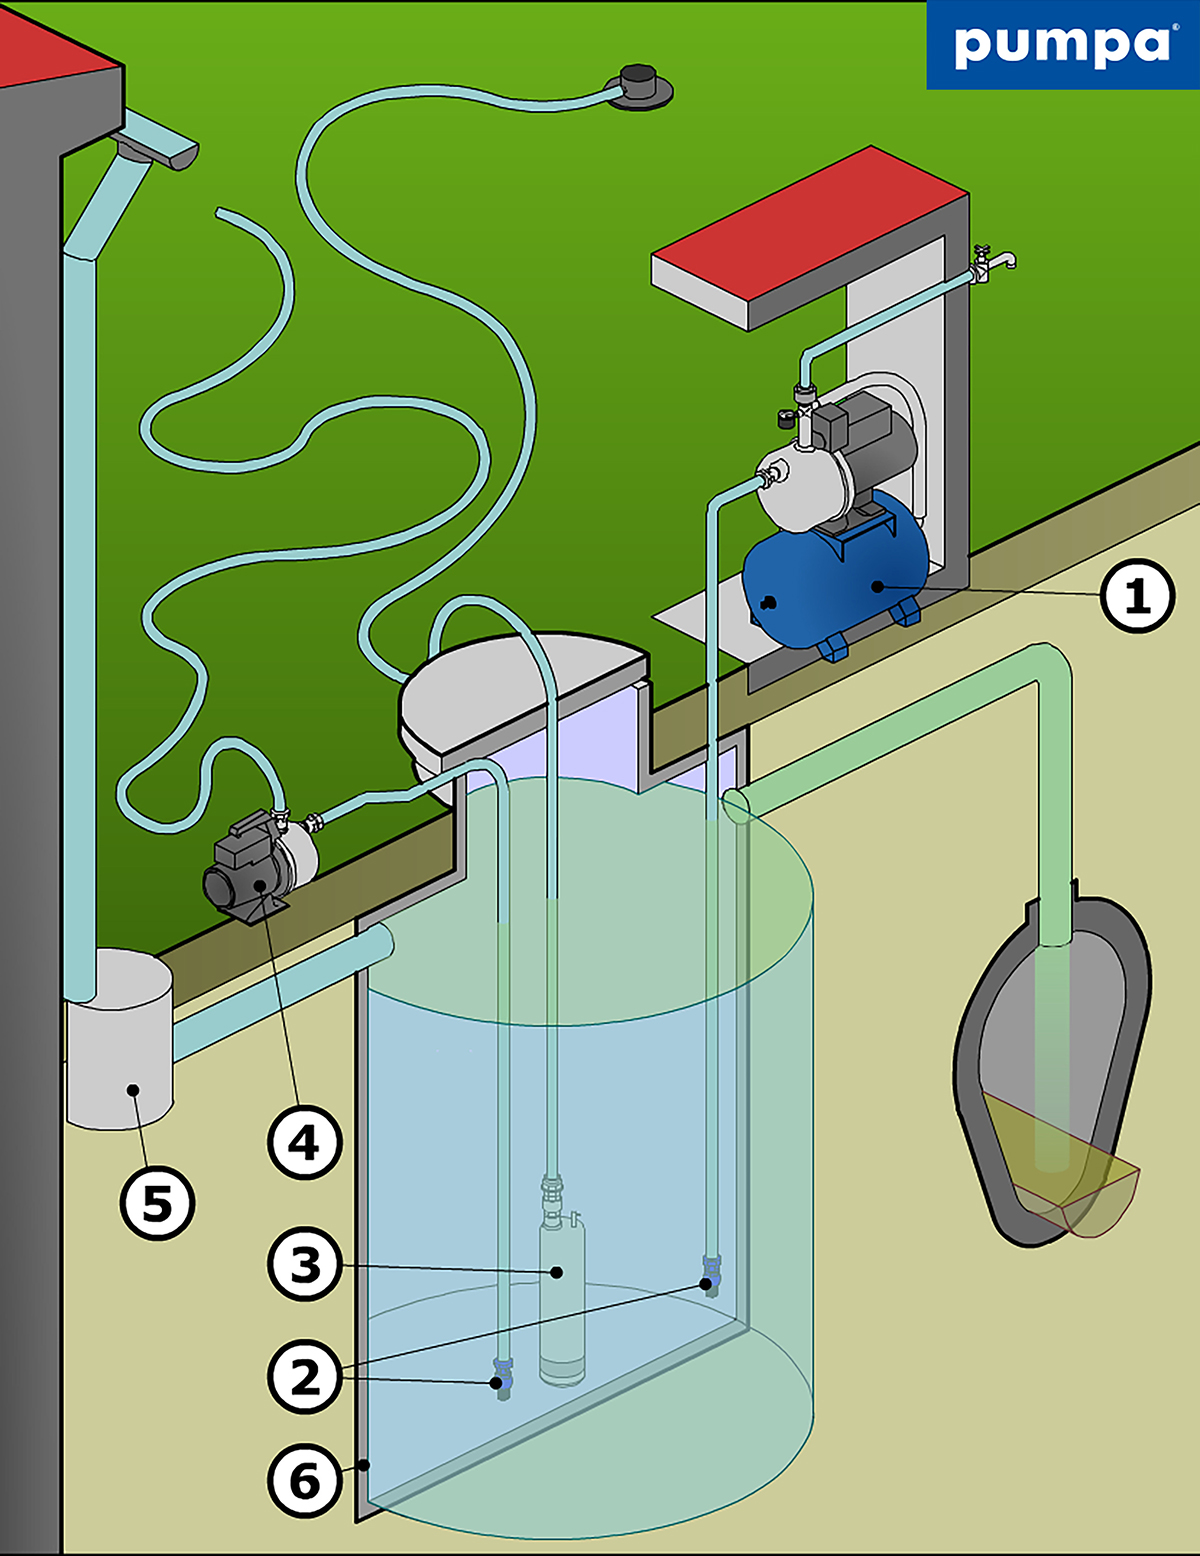 Schema nadrze na destovou vodu s prislusenstvim a napojenim na zavlazovaci system